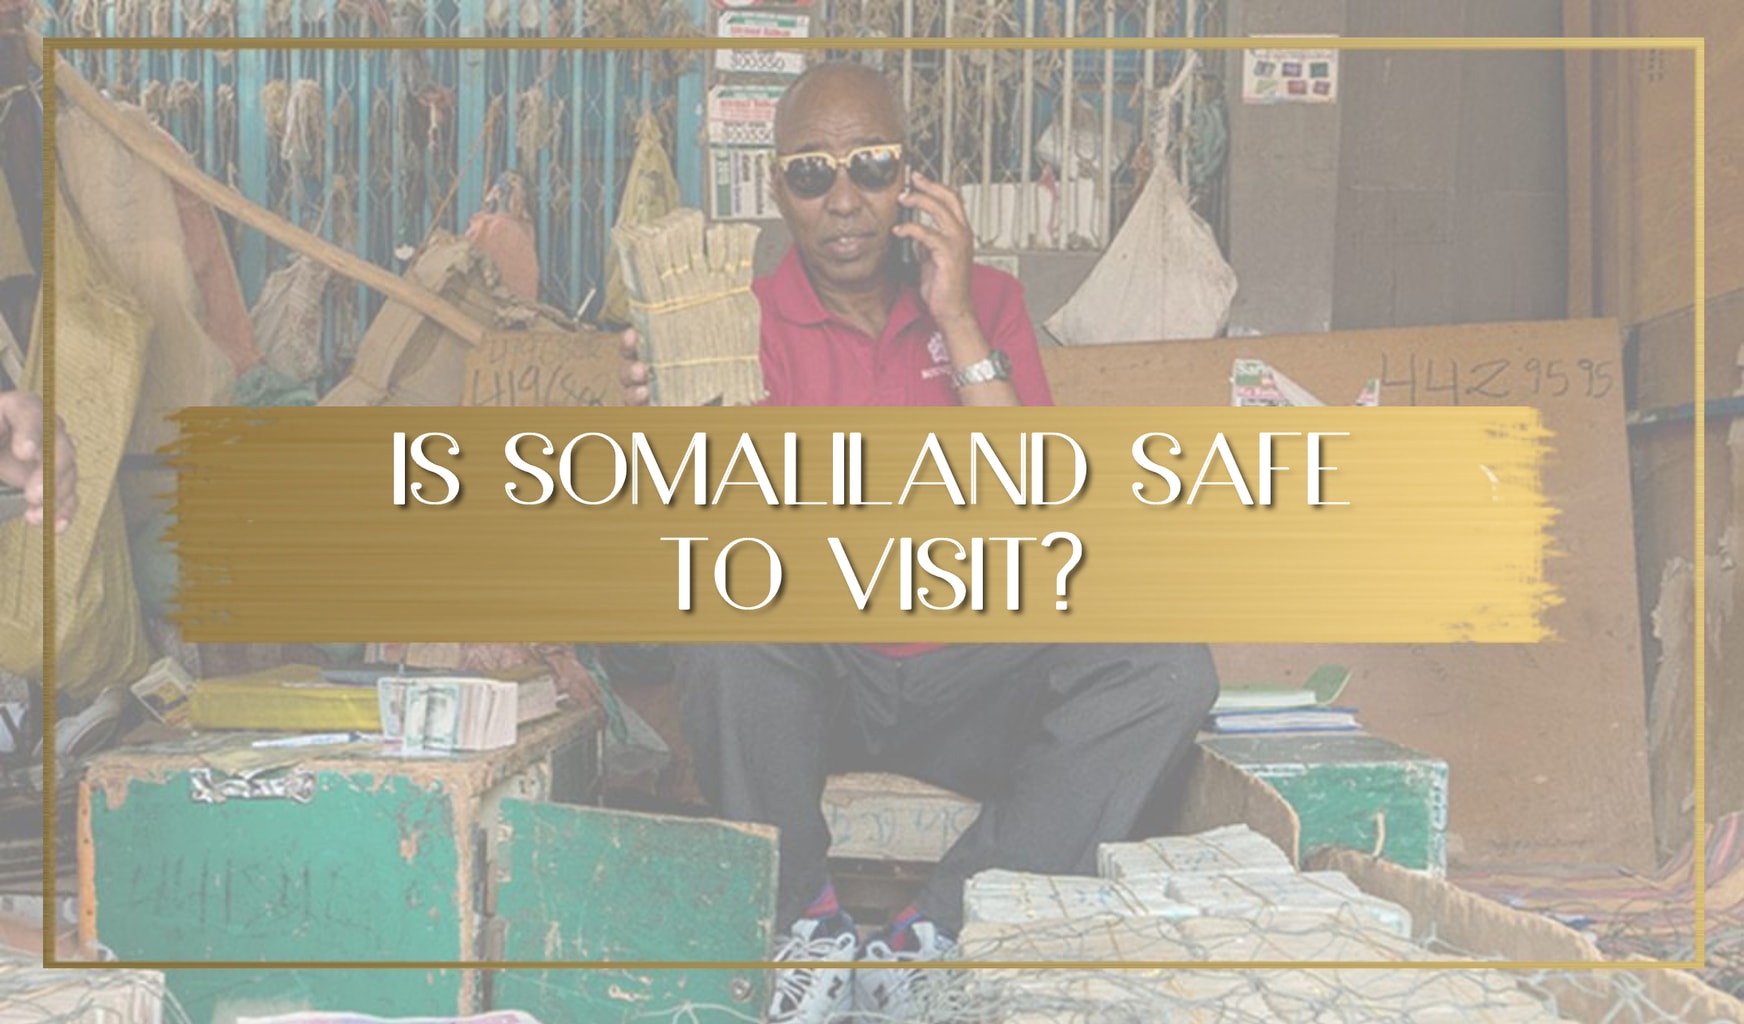 Somali chat rooms north america